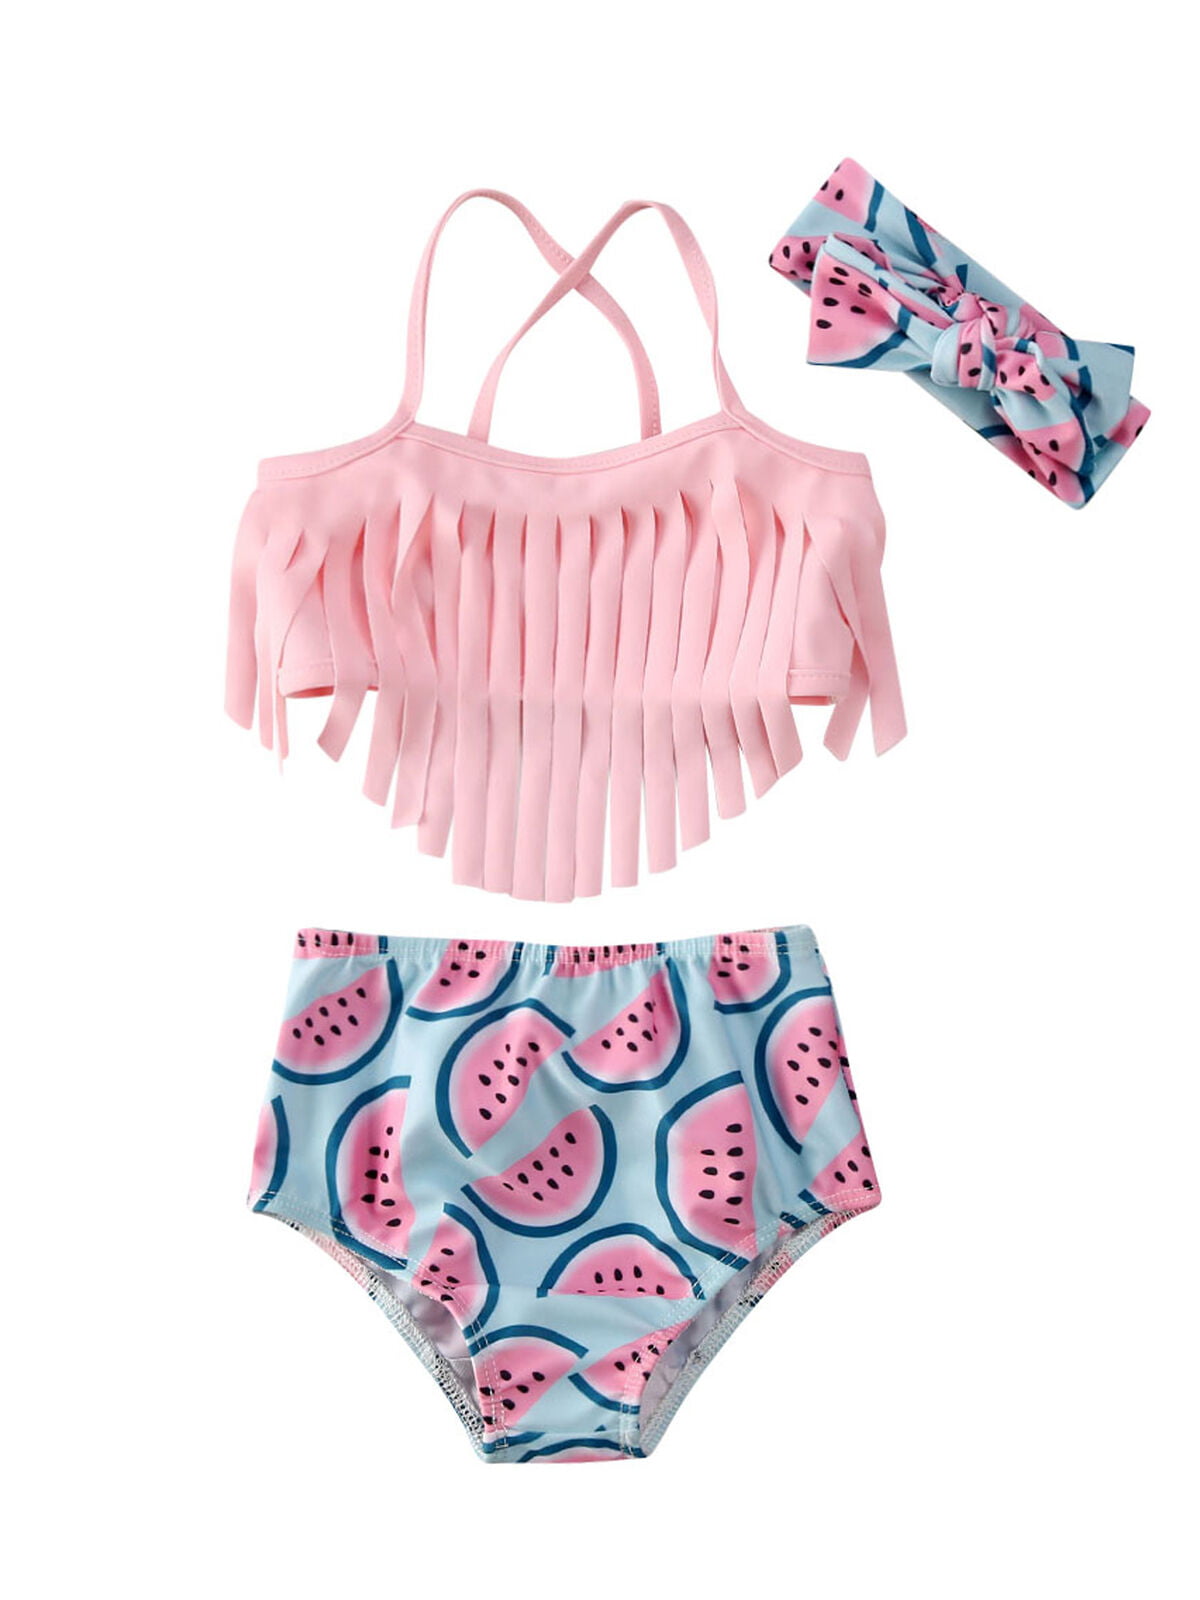 YRD TECH Kids Baby Girl Bikini Ruffle Swimwear Swimsuit Bathing Suit 